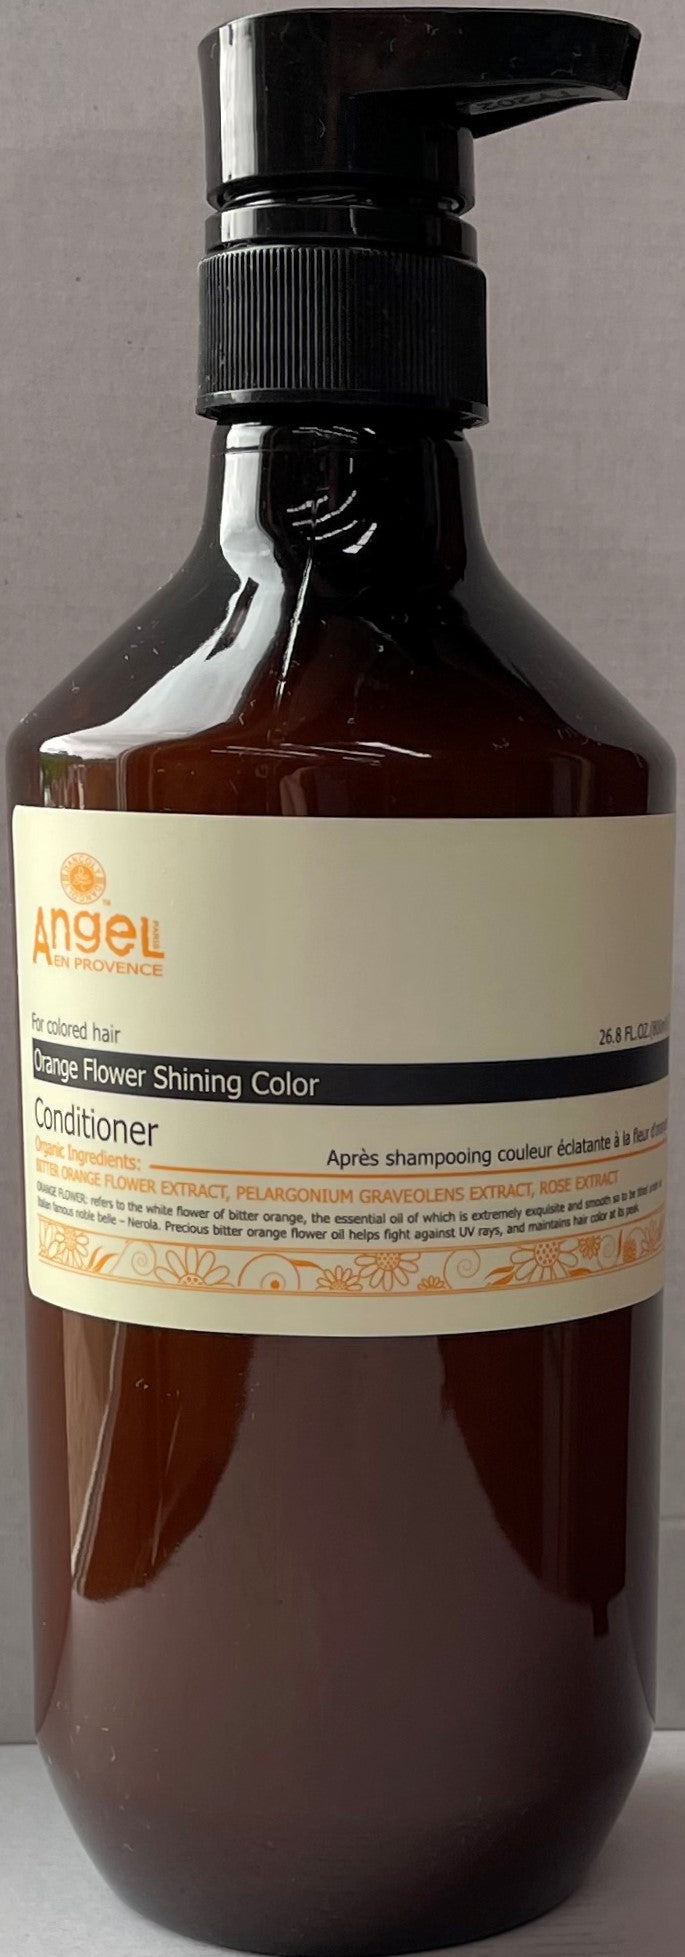 Angel Orange Flower Shining Color Conditioner 800 ml